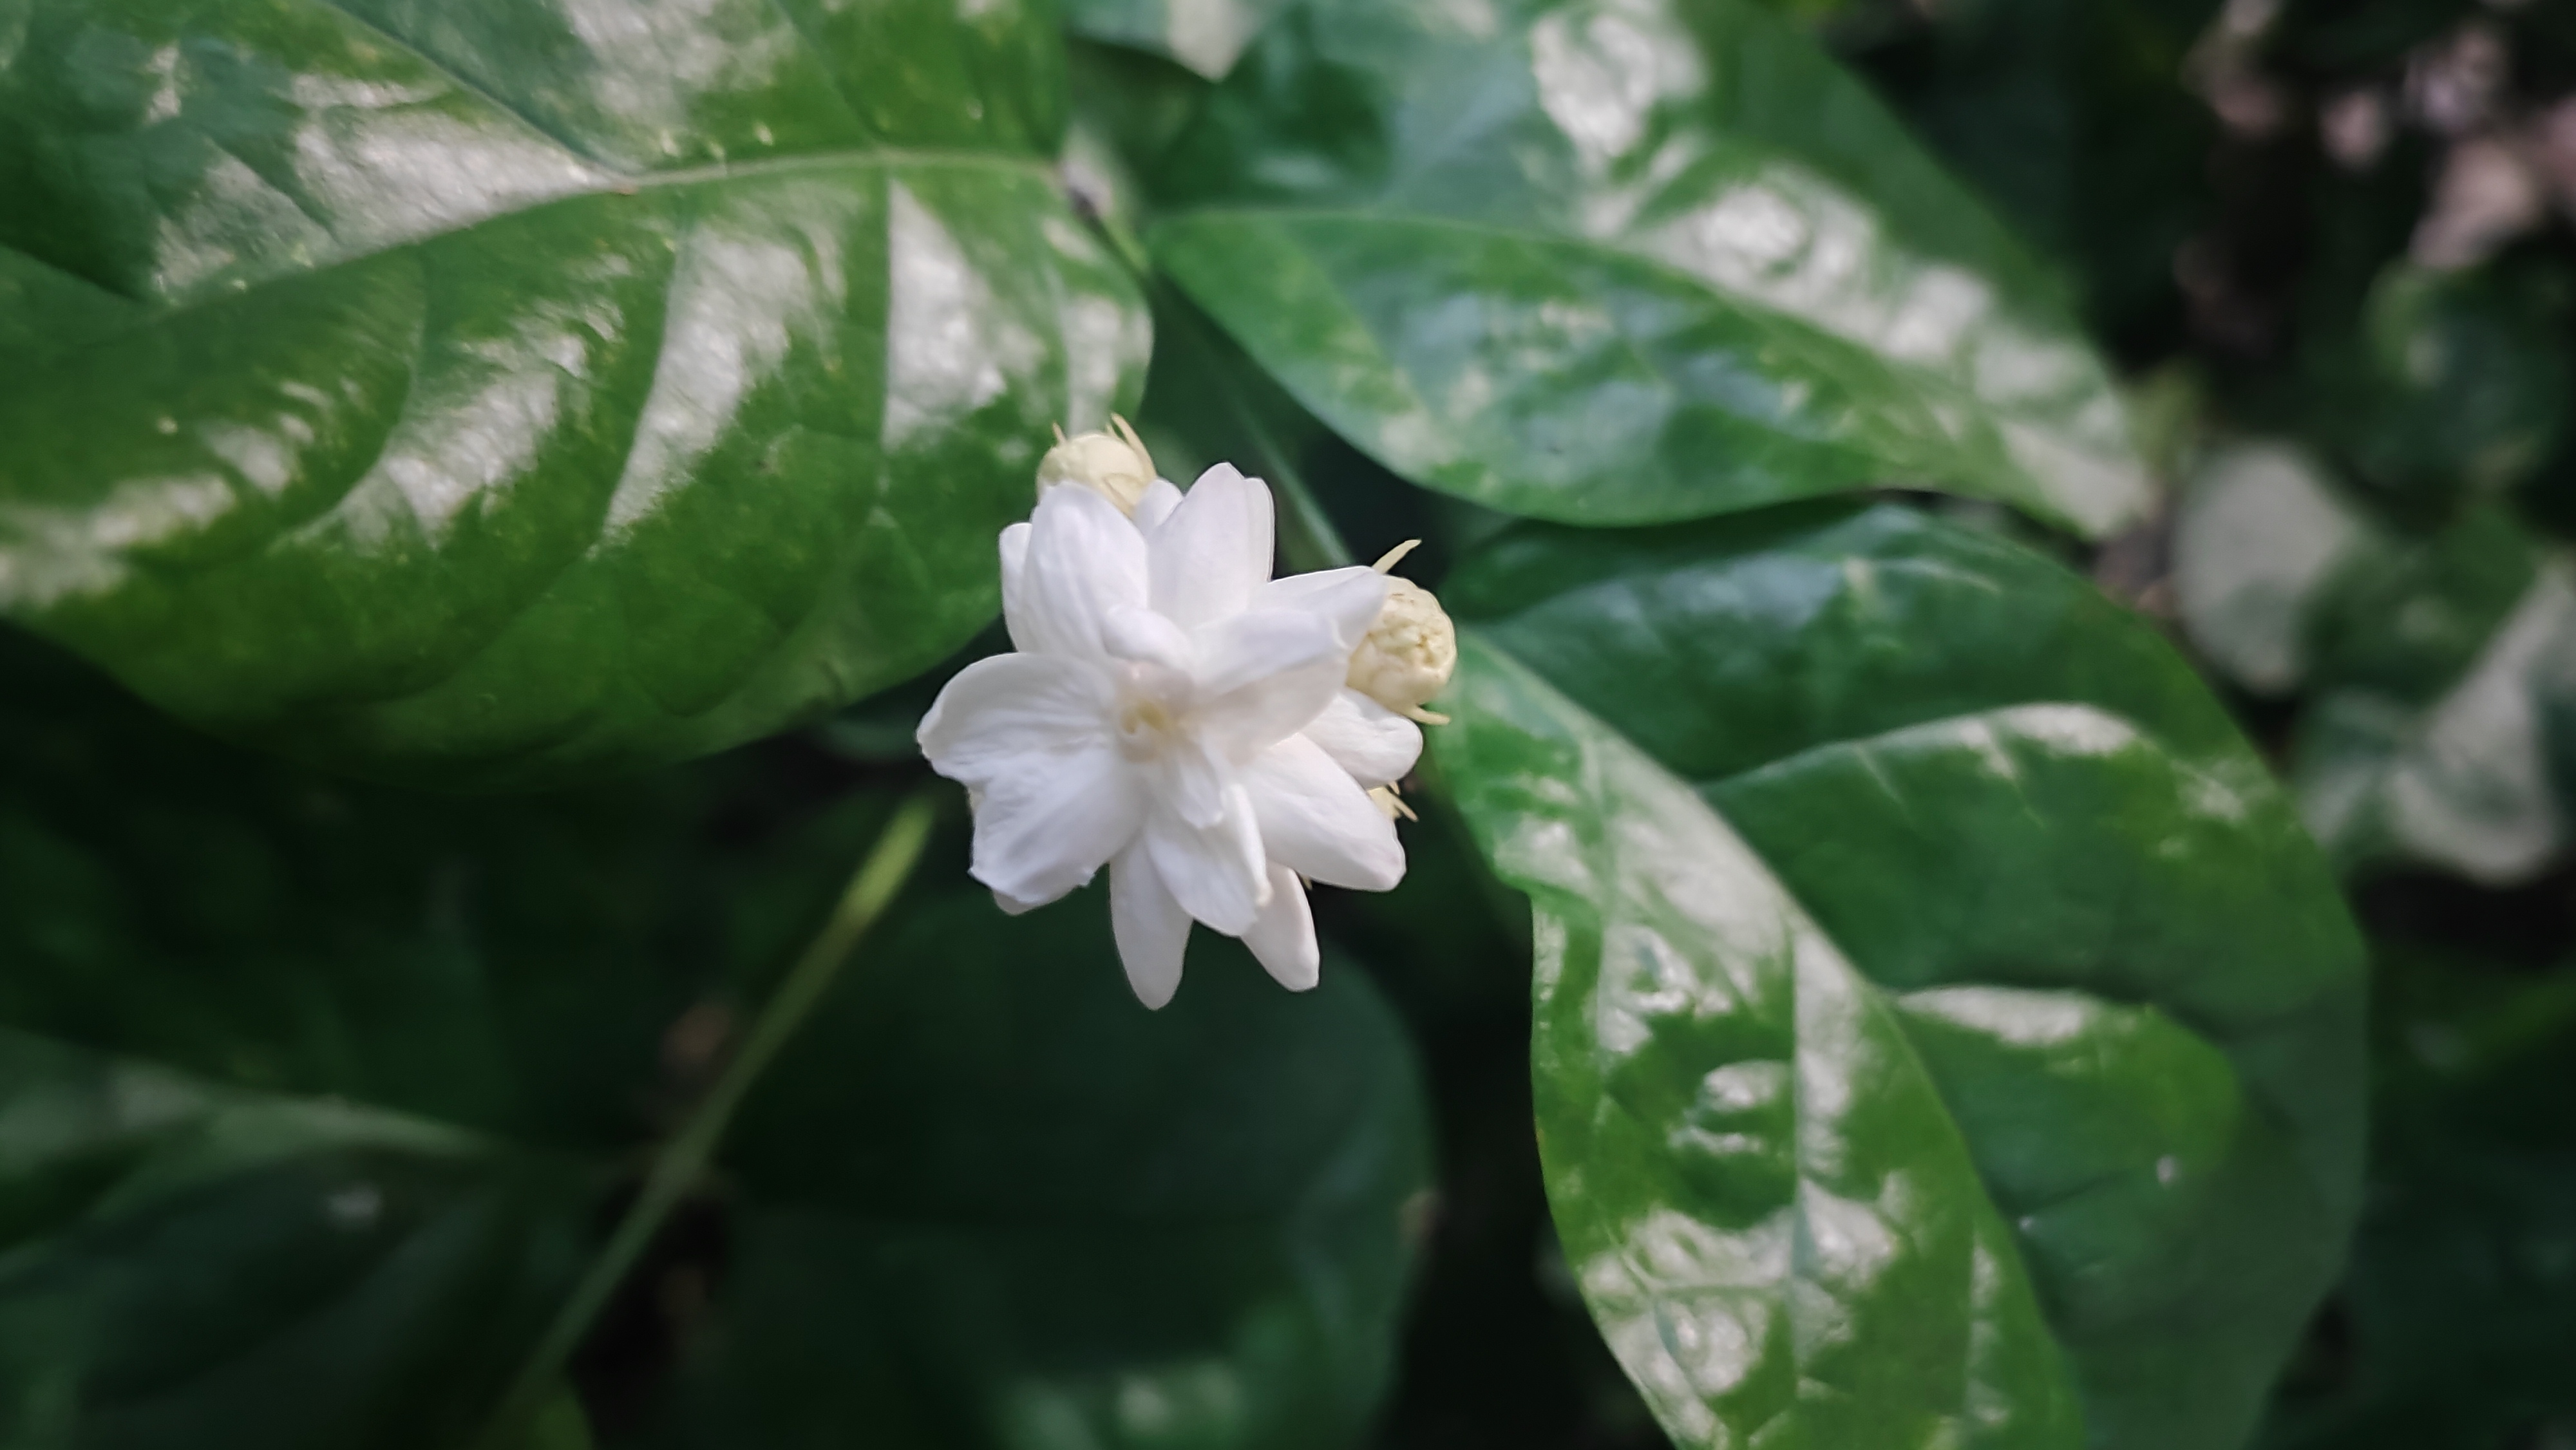 arabian-jasmine-or-or-10-beneficiary-to-beautycreativity-steemit